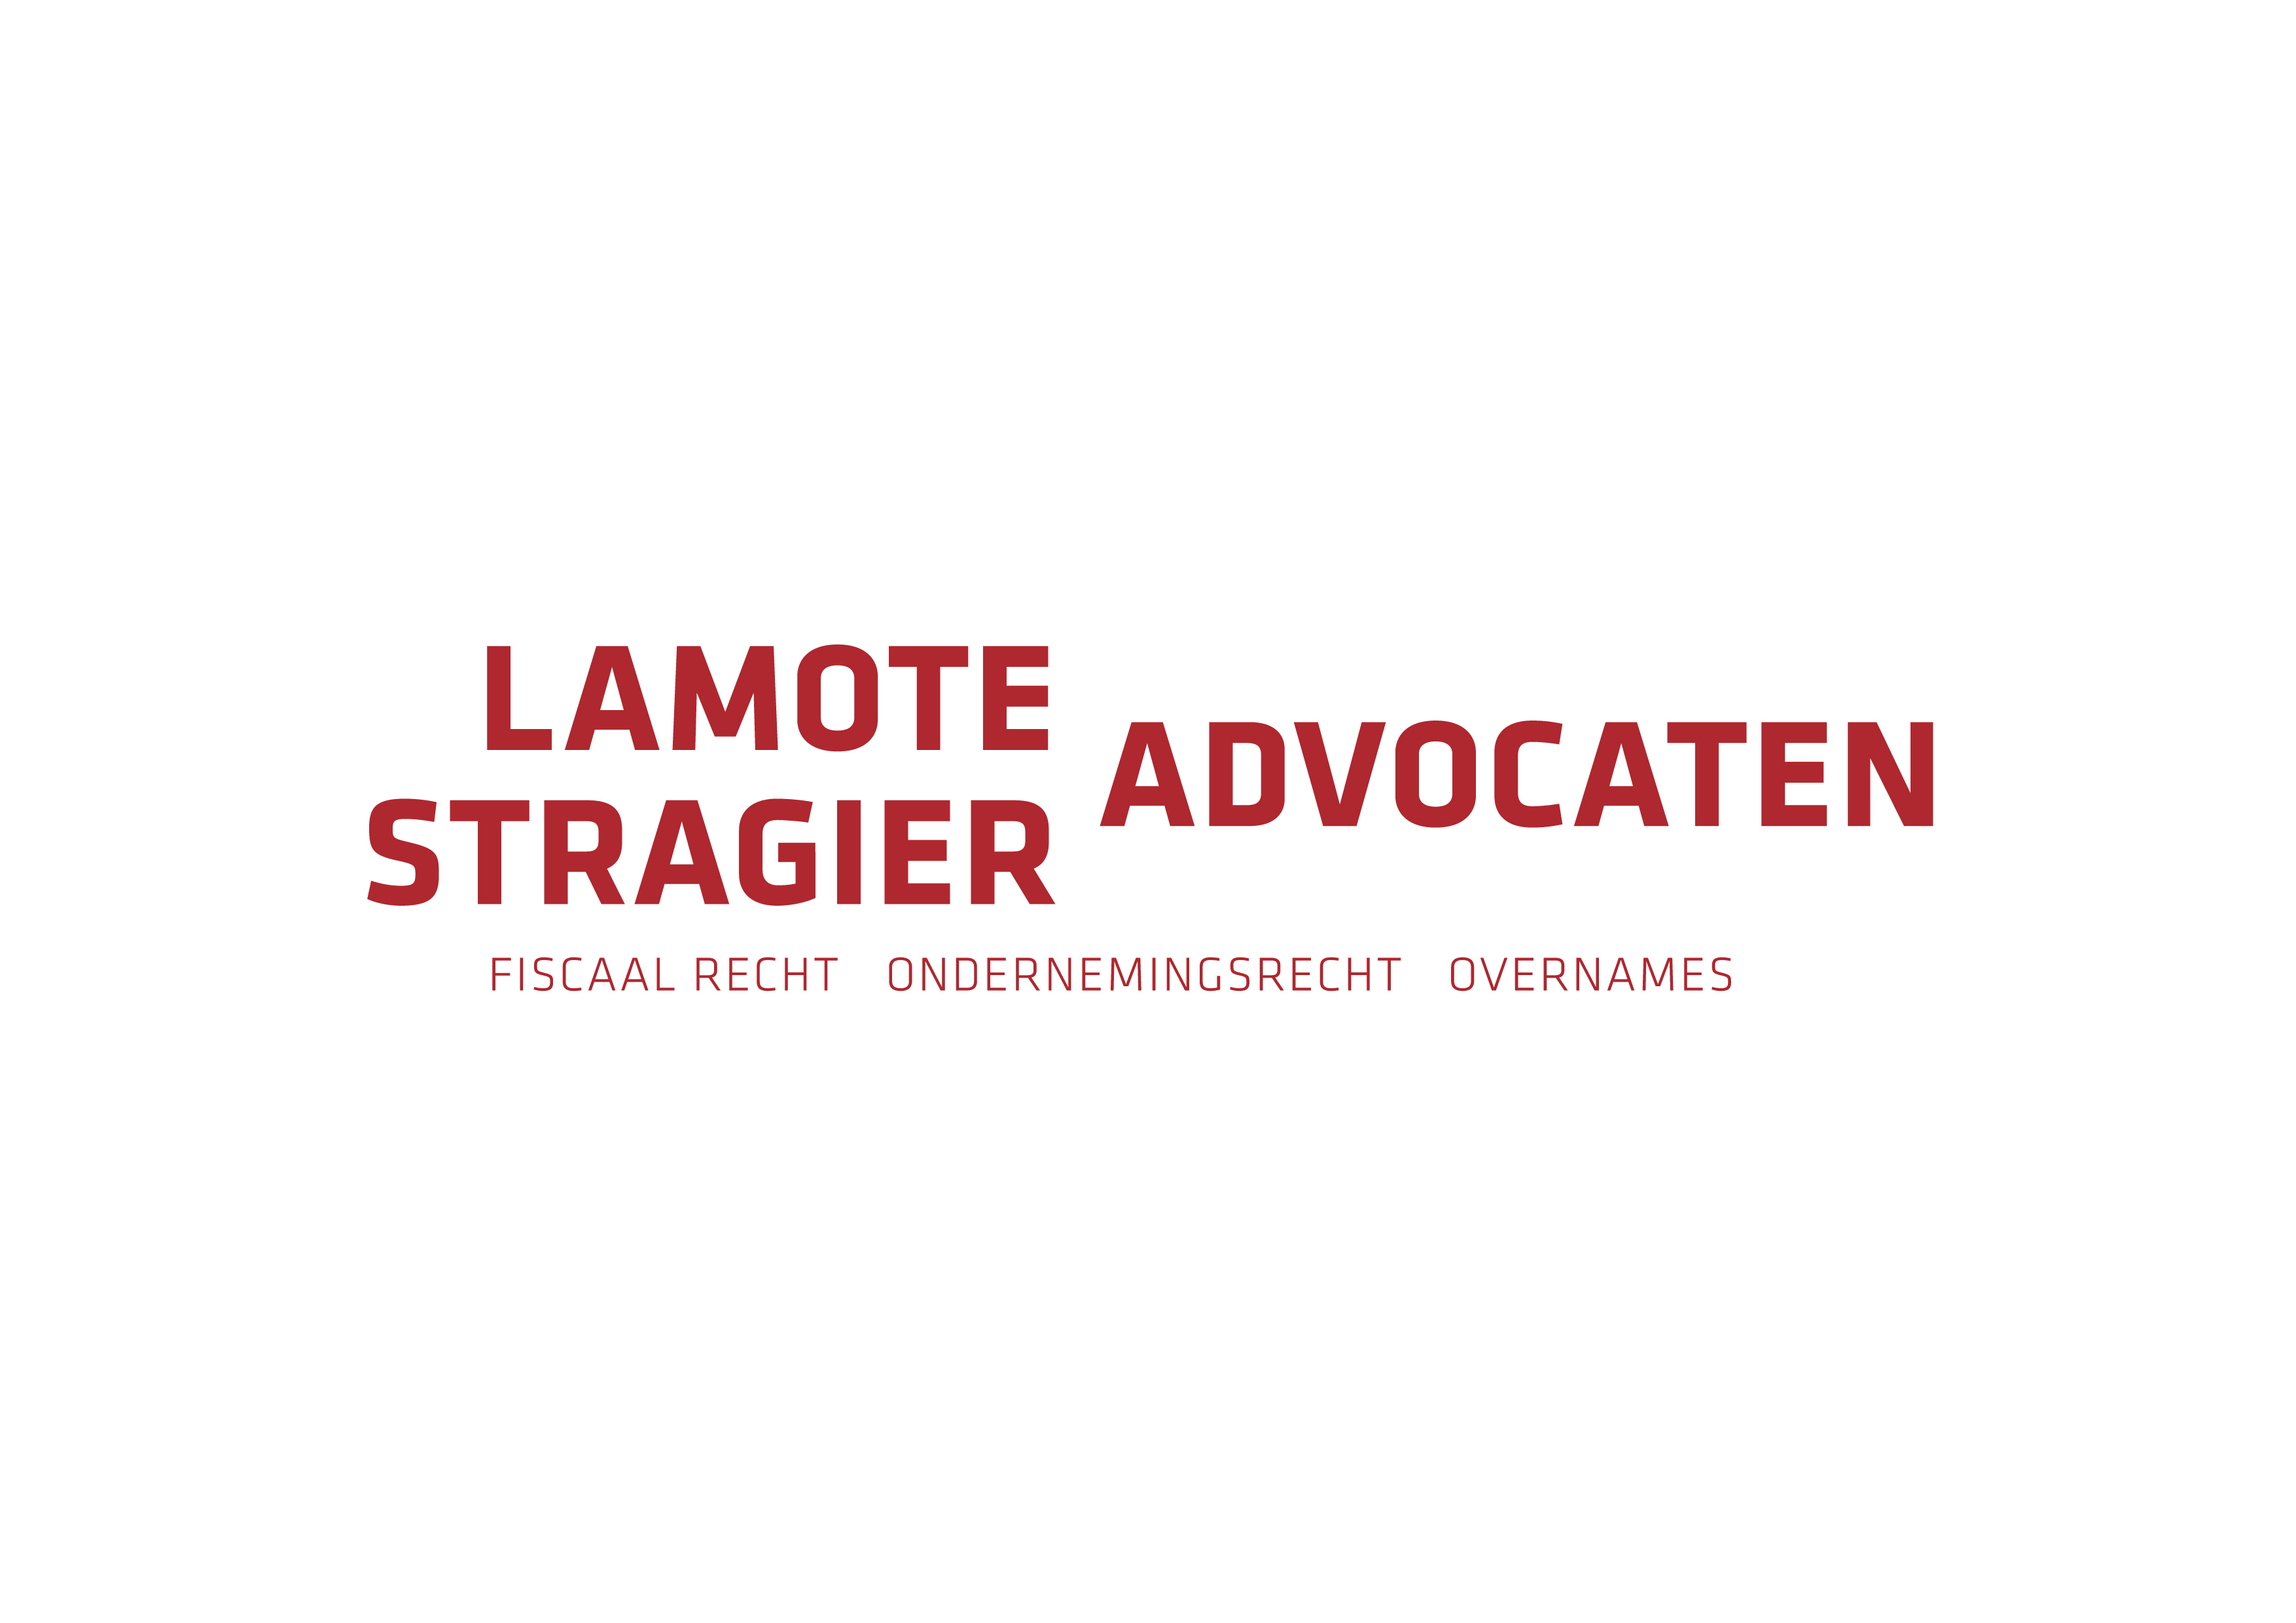 Lamote Stragier Advocaten